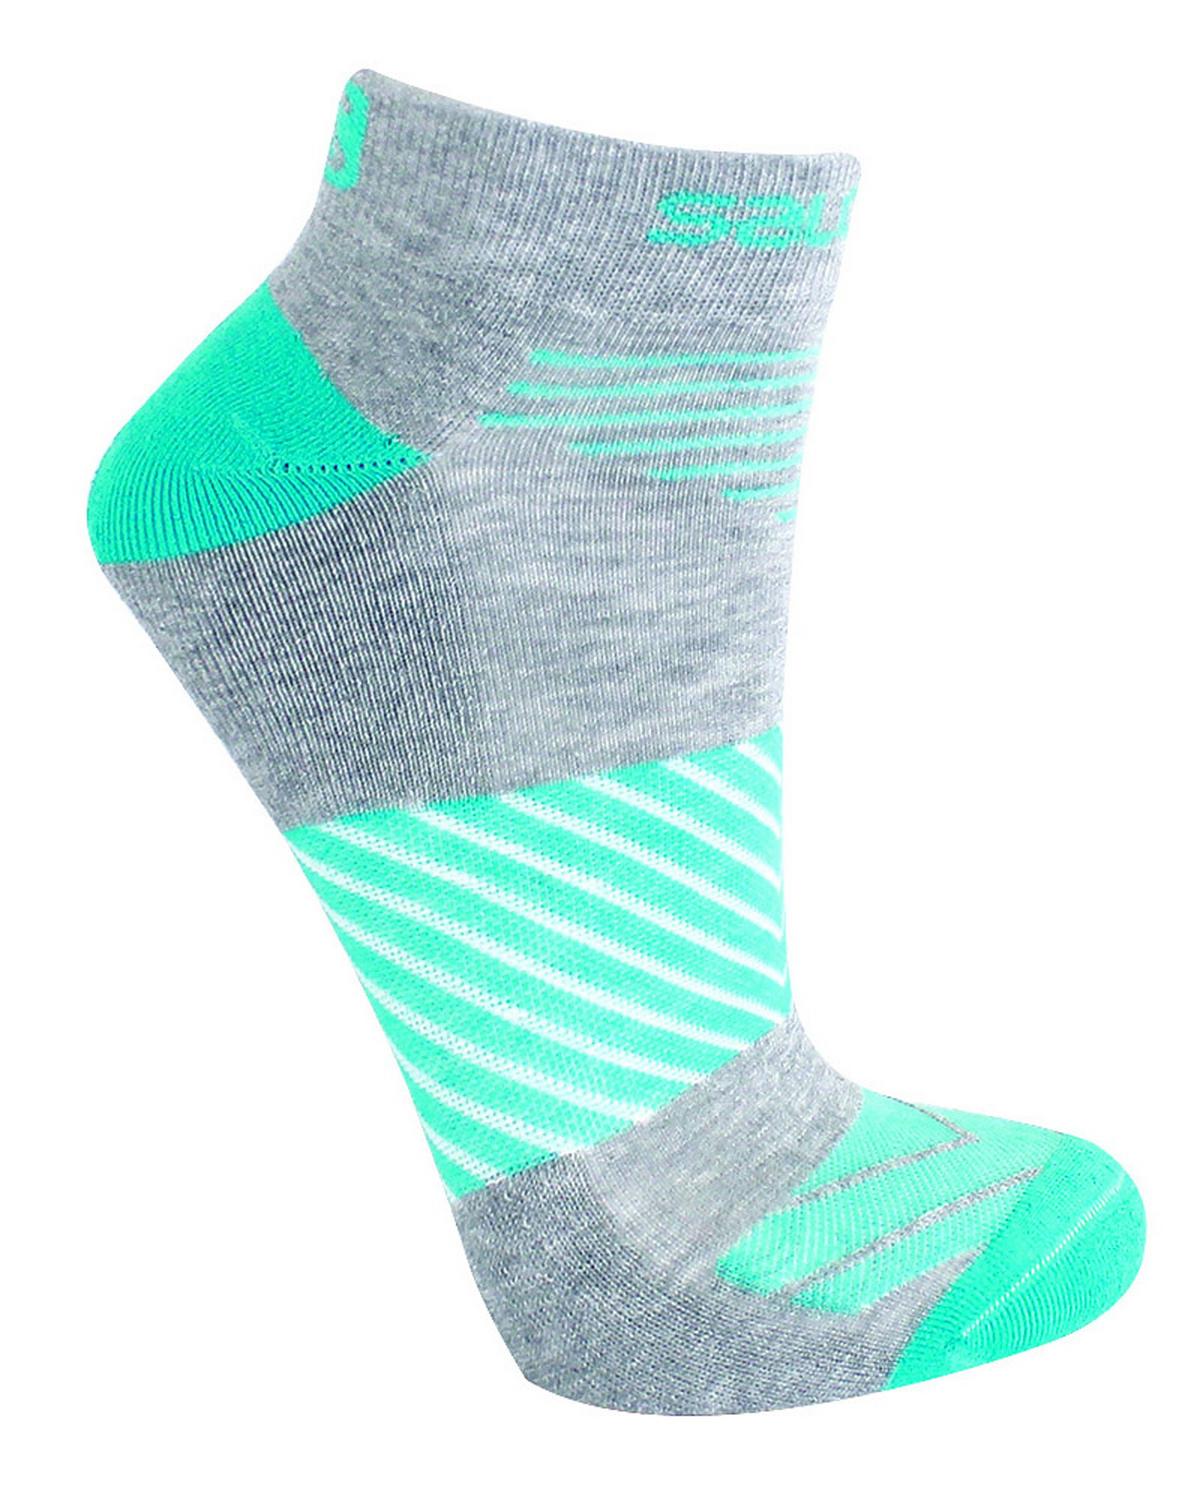 Salomon Women’s Speed Running Socks -  Aqua